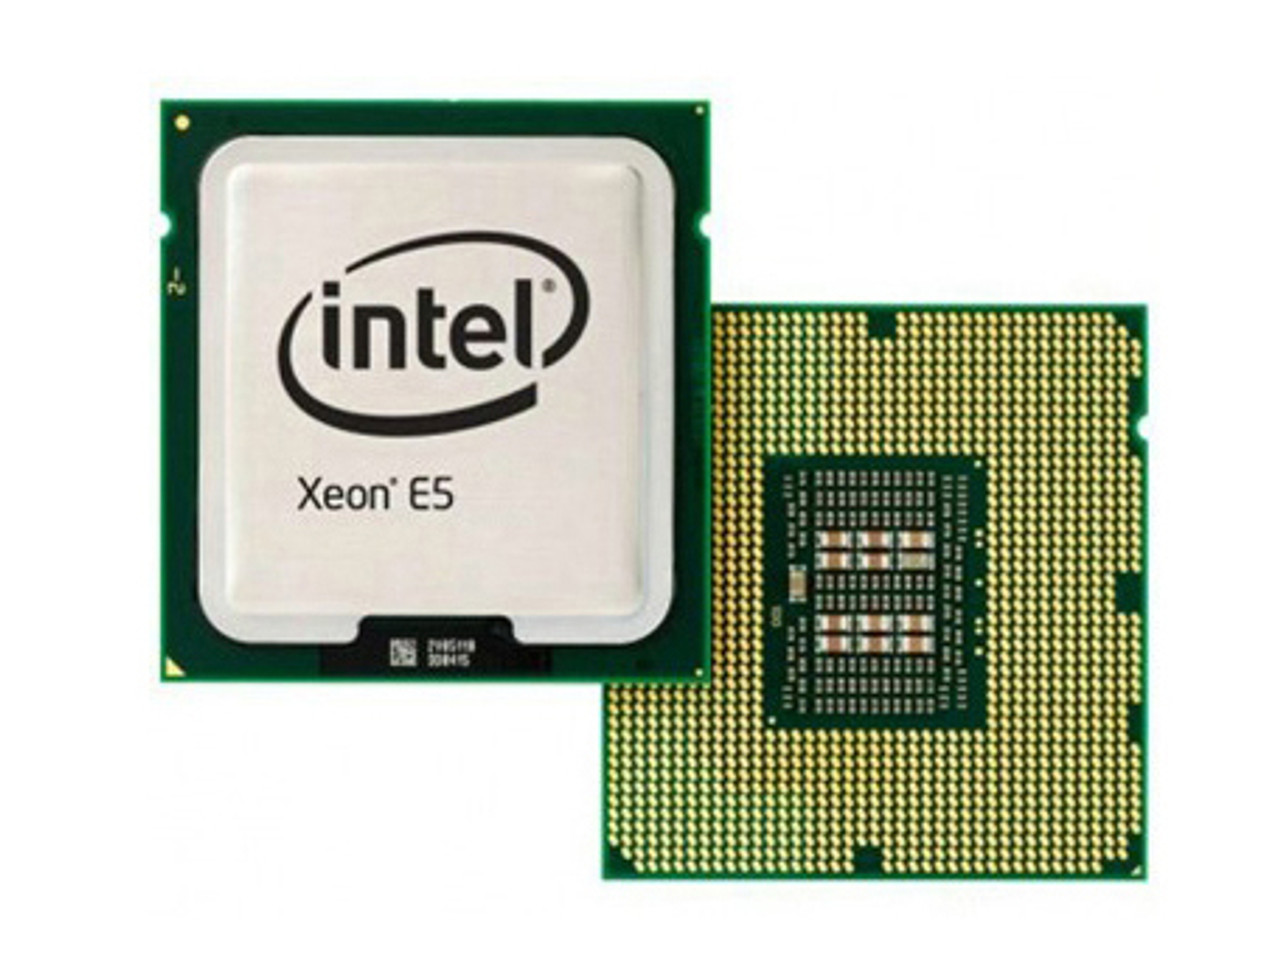 SLANG-06 Intel Xeon E5205 Dual Core 1.86GHz 1066MHz FSB 6MB L2 Cache Socket LGA771 Processor